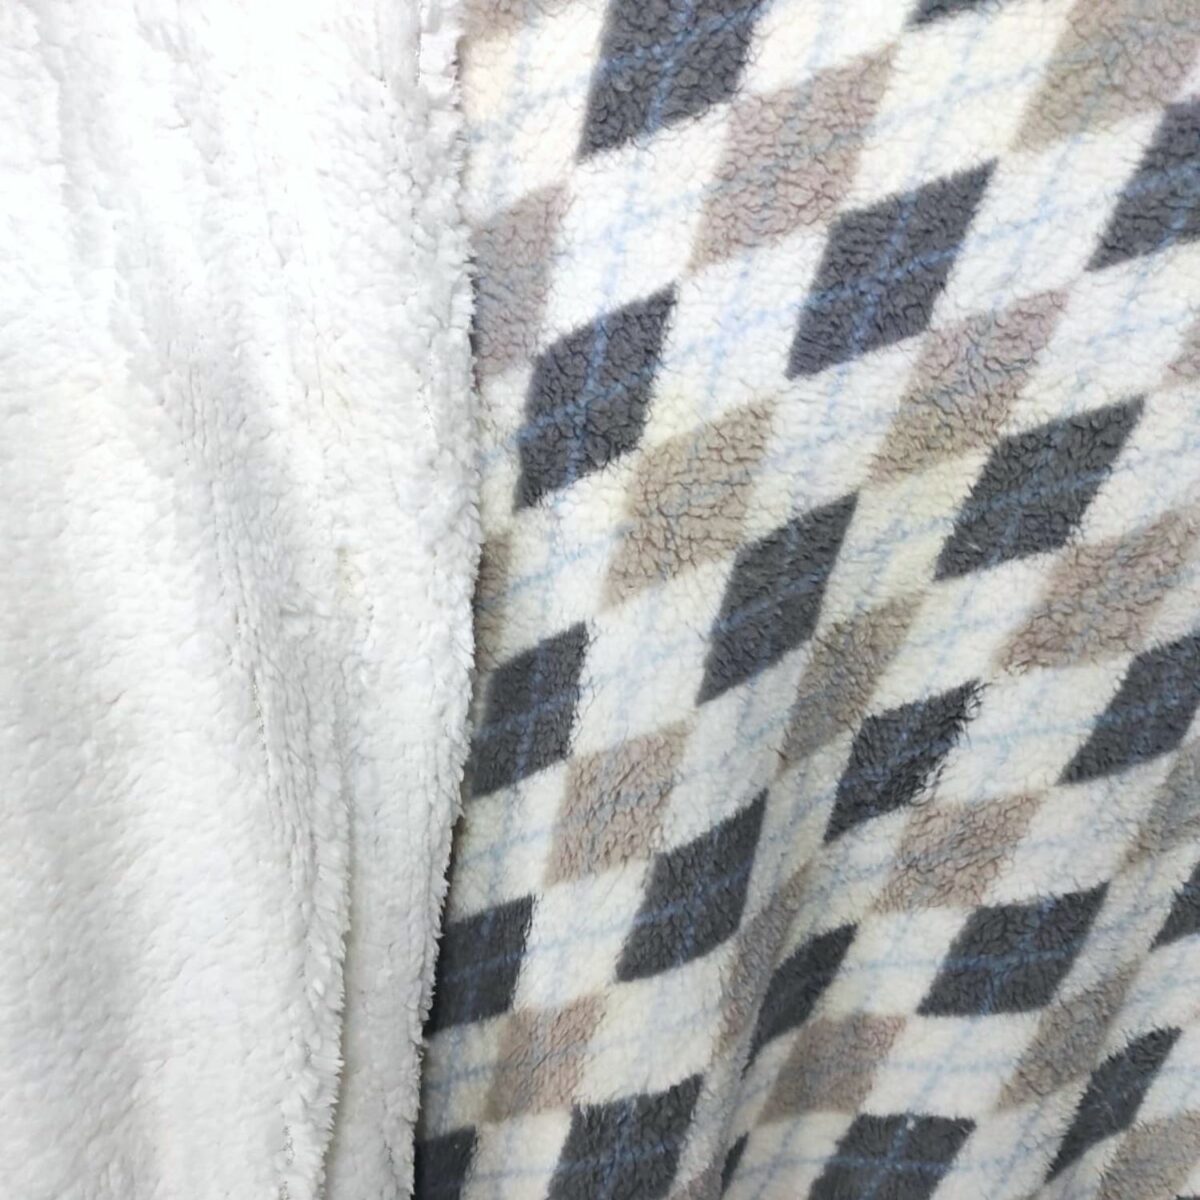 coperta-amburgo-grigio-rombi-sherpa-calda-morbida-invernale-dettaglio-sherpa